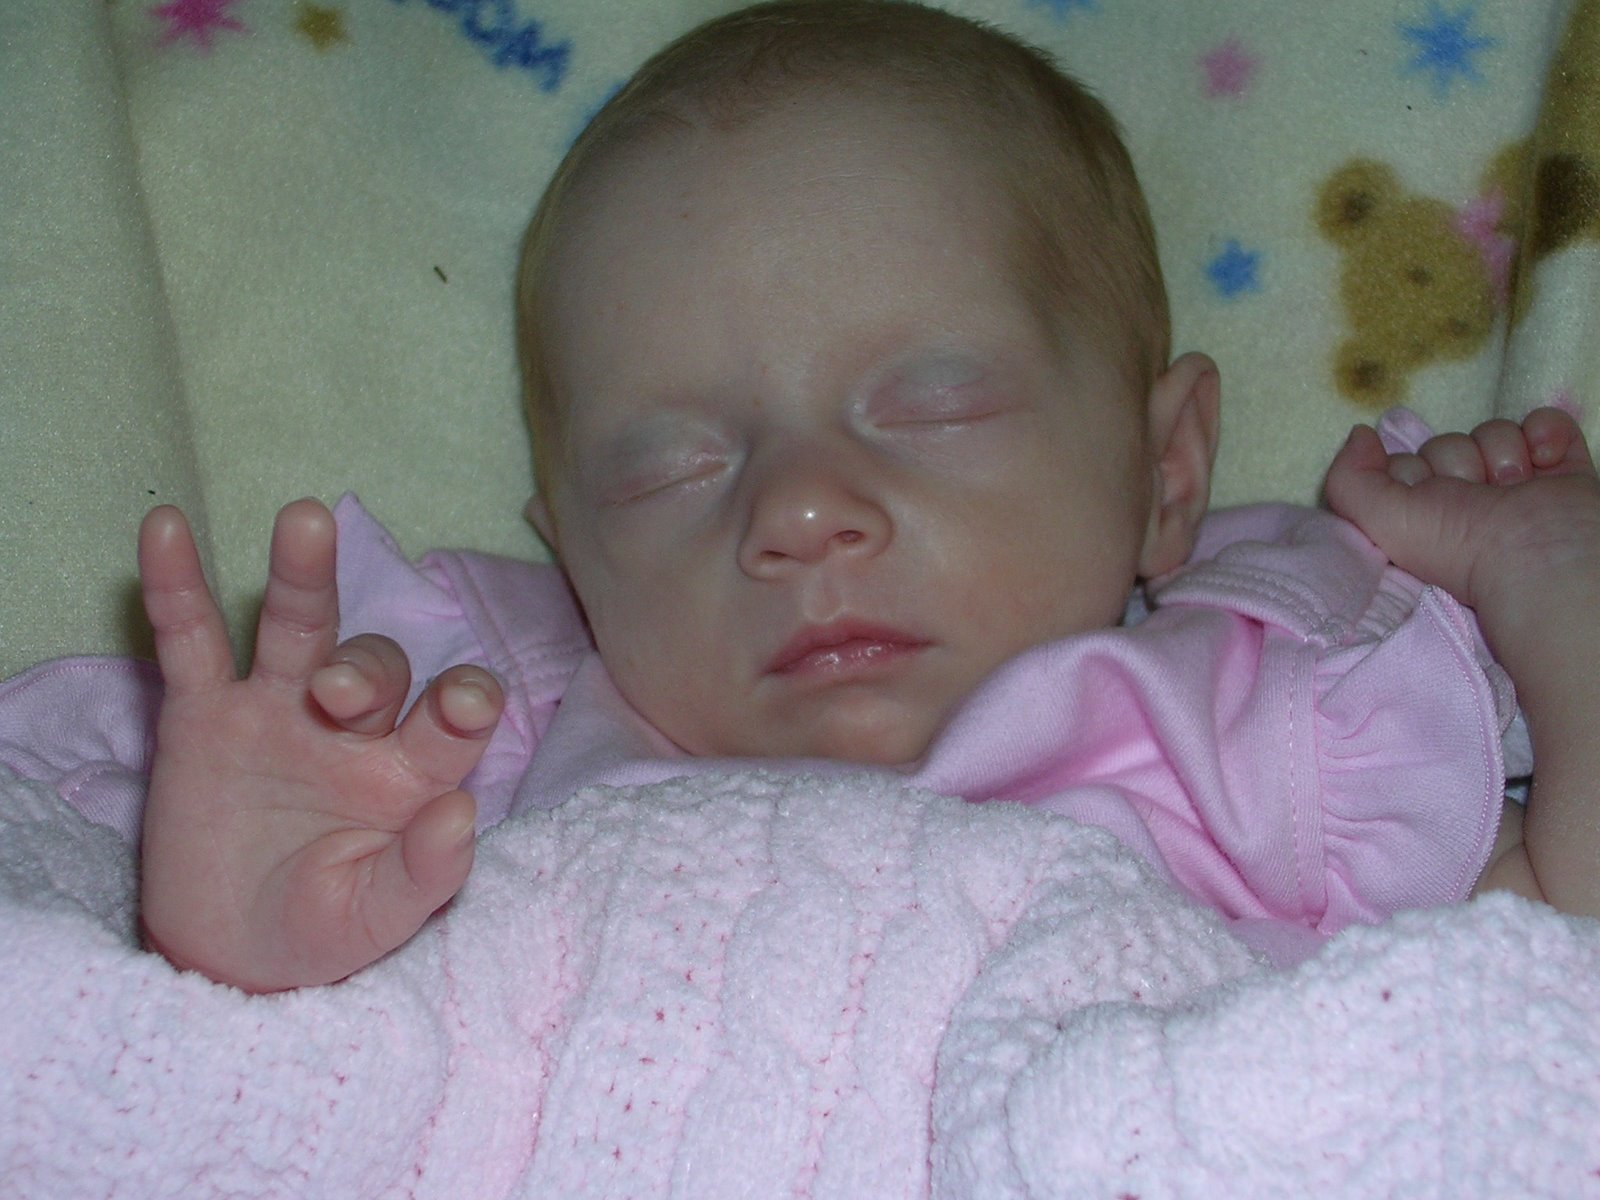 [Kate+sleeping+with+her+hands.jpg]